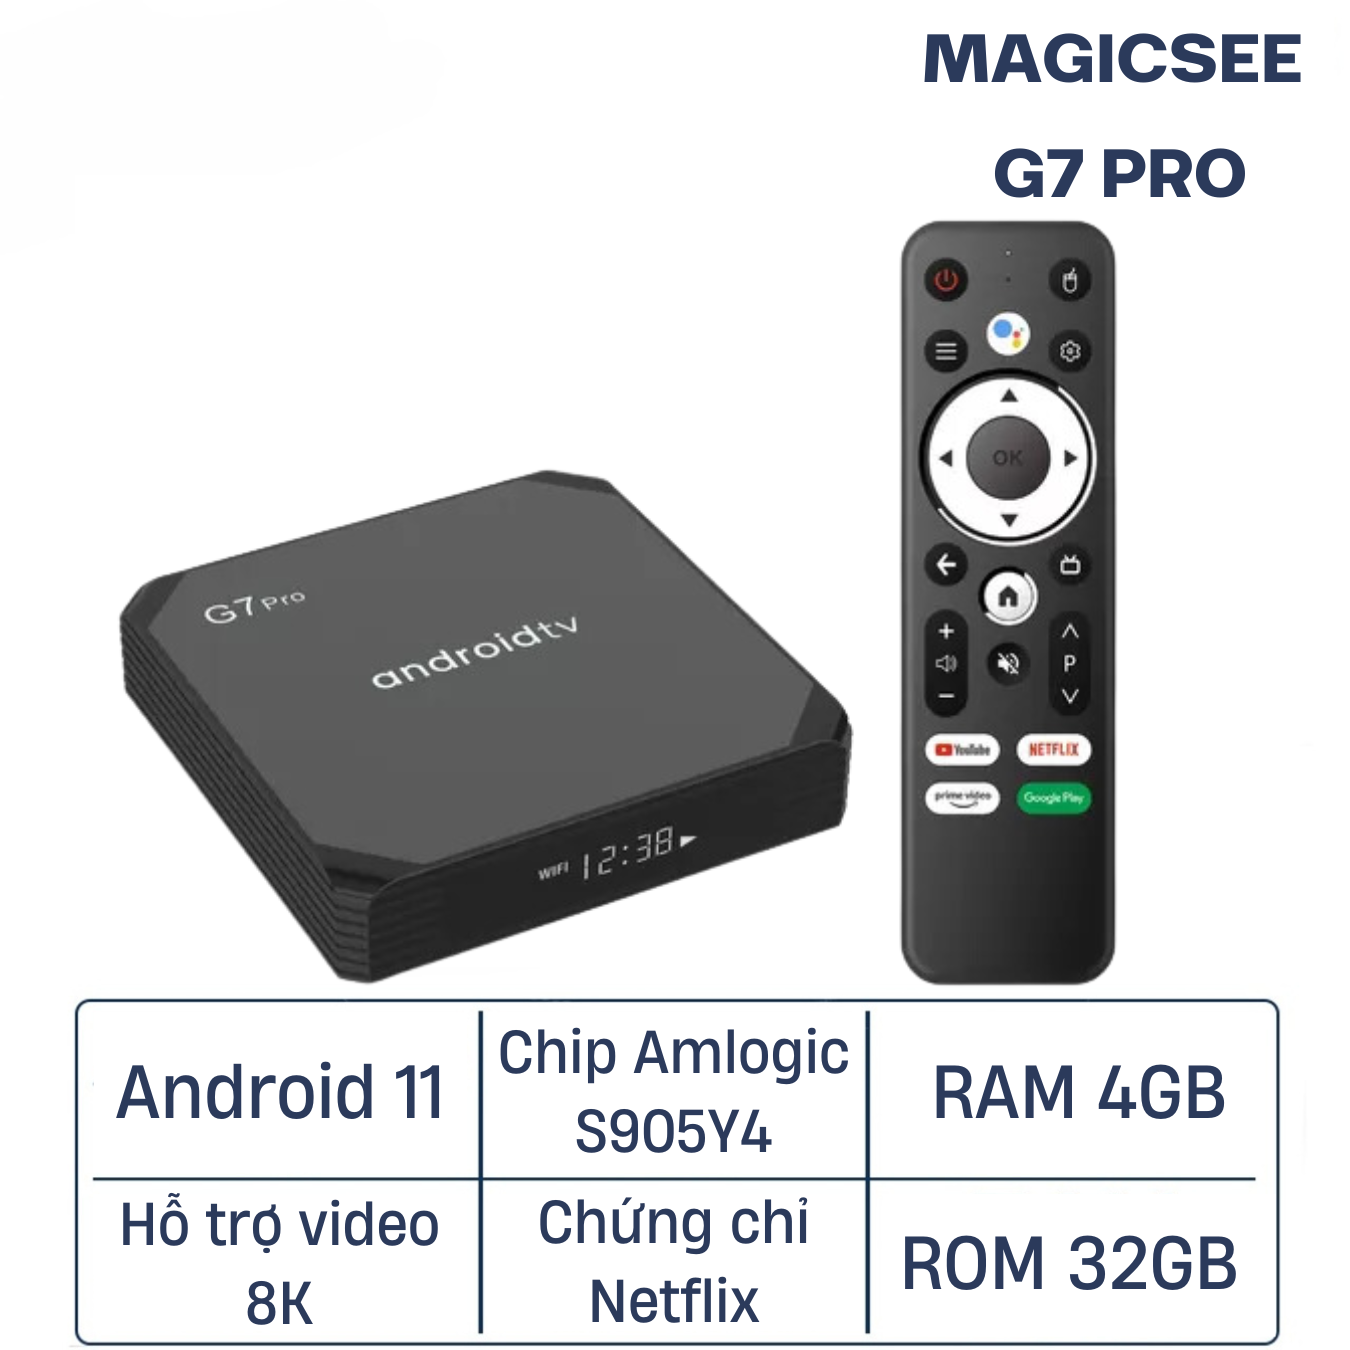 Android Tivi Box Magicsee G7 Pro - Android 11 - Ram 4GB - Bộ nhớ 32GB - chip Amlogic S905Y4